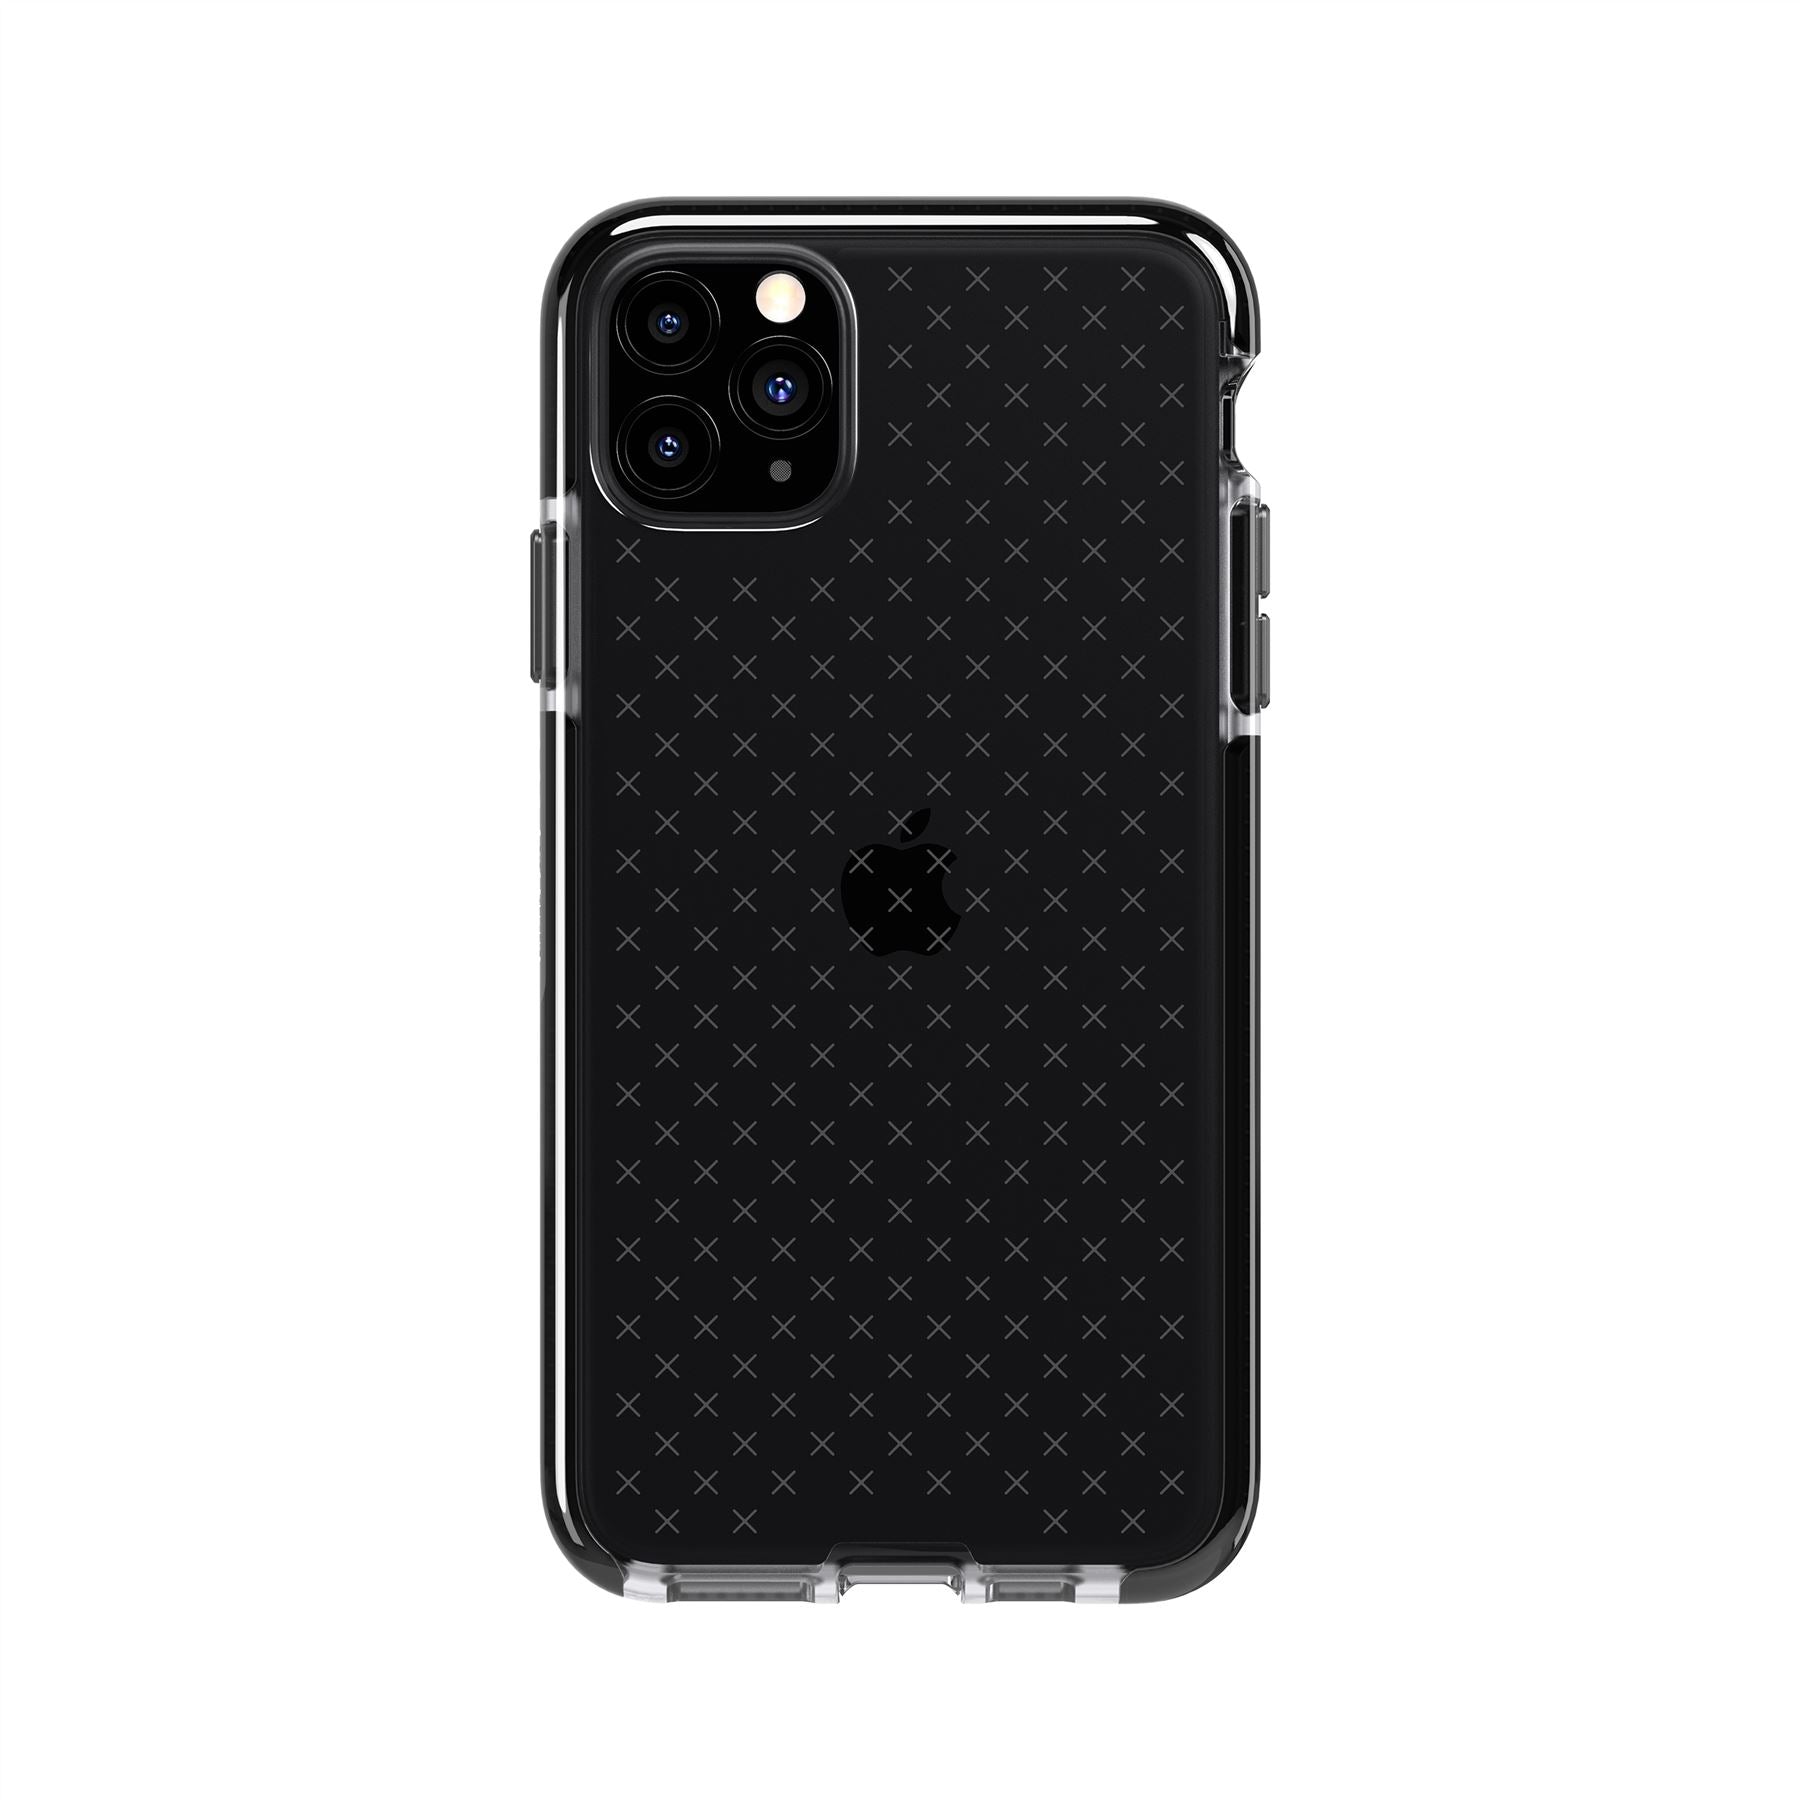 Evo Check - Apple iPhone 11 Pro Max Case - Smokey Black